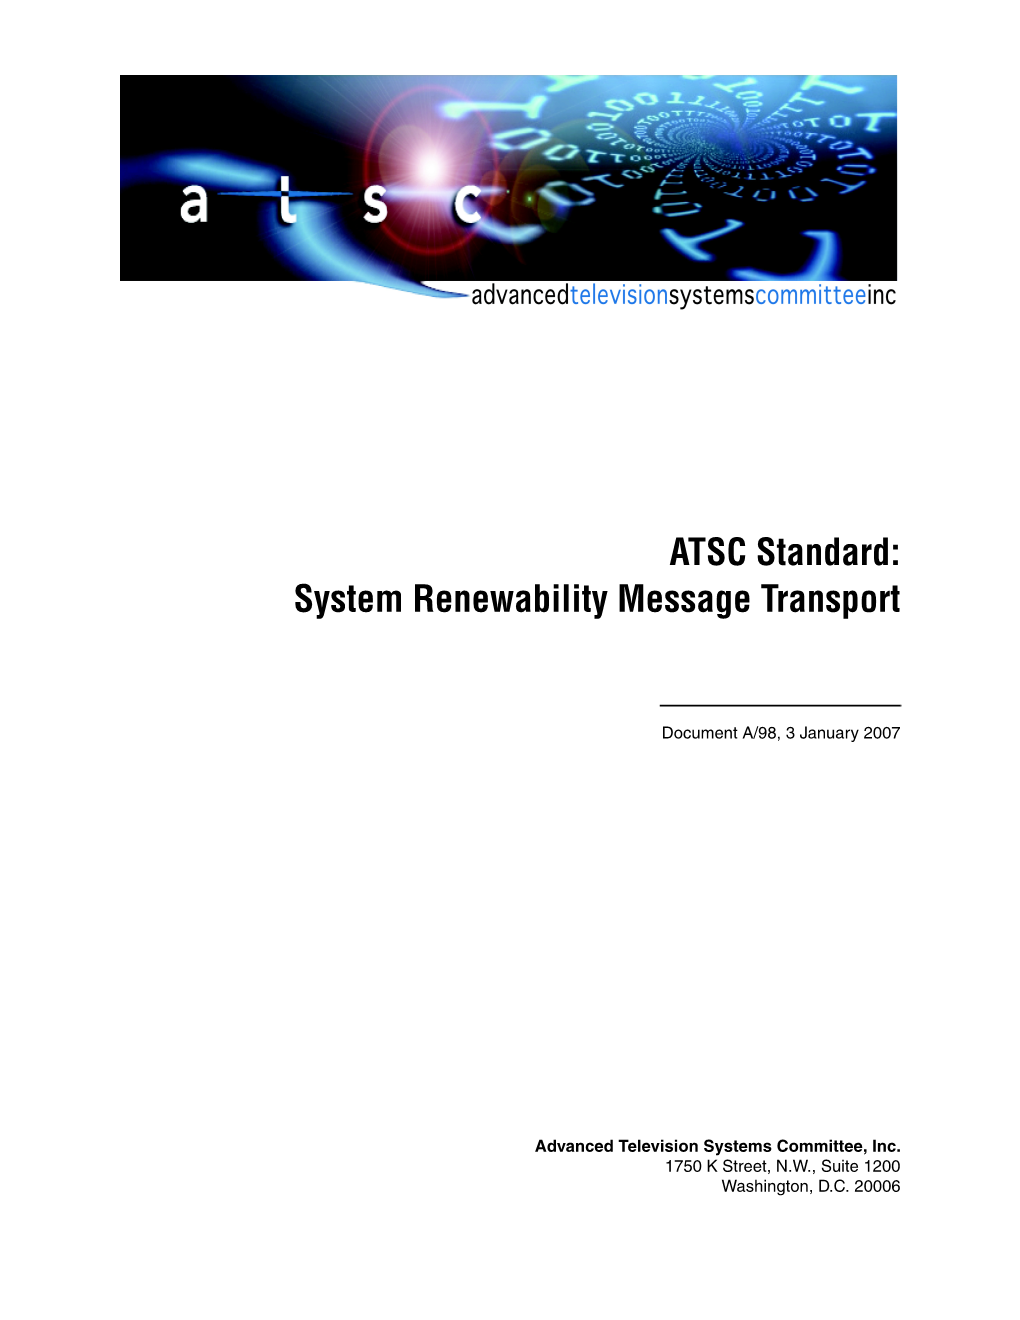 ATSC Standard: System Renewability Message Transport